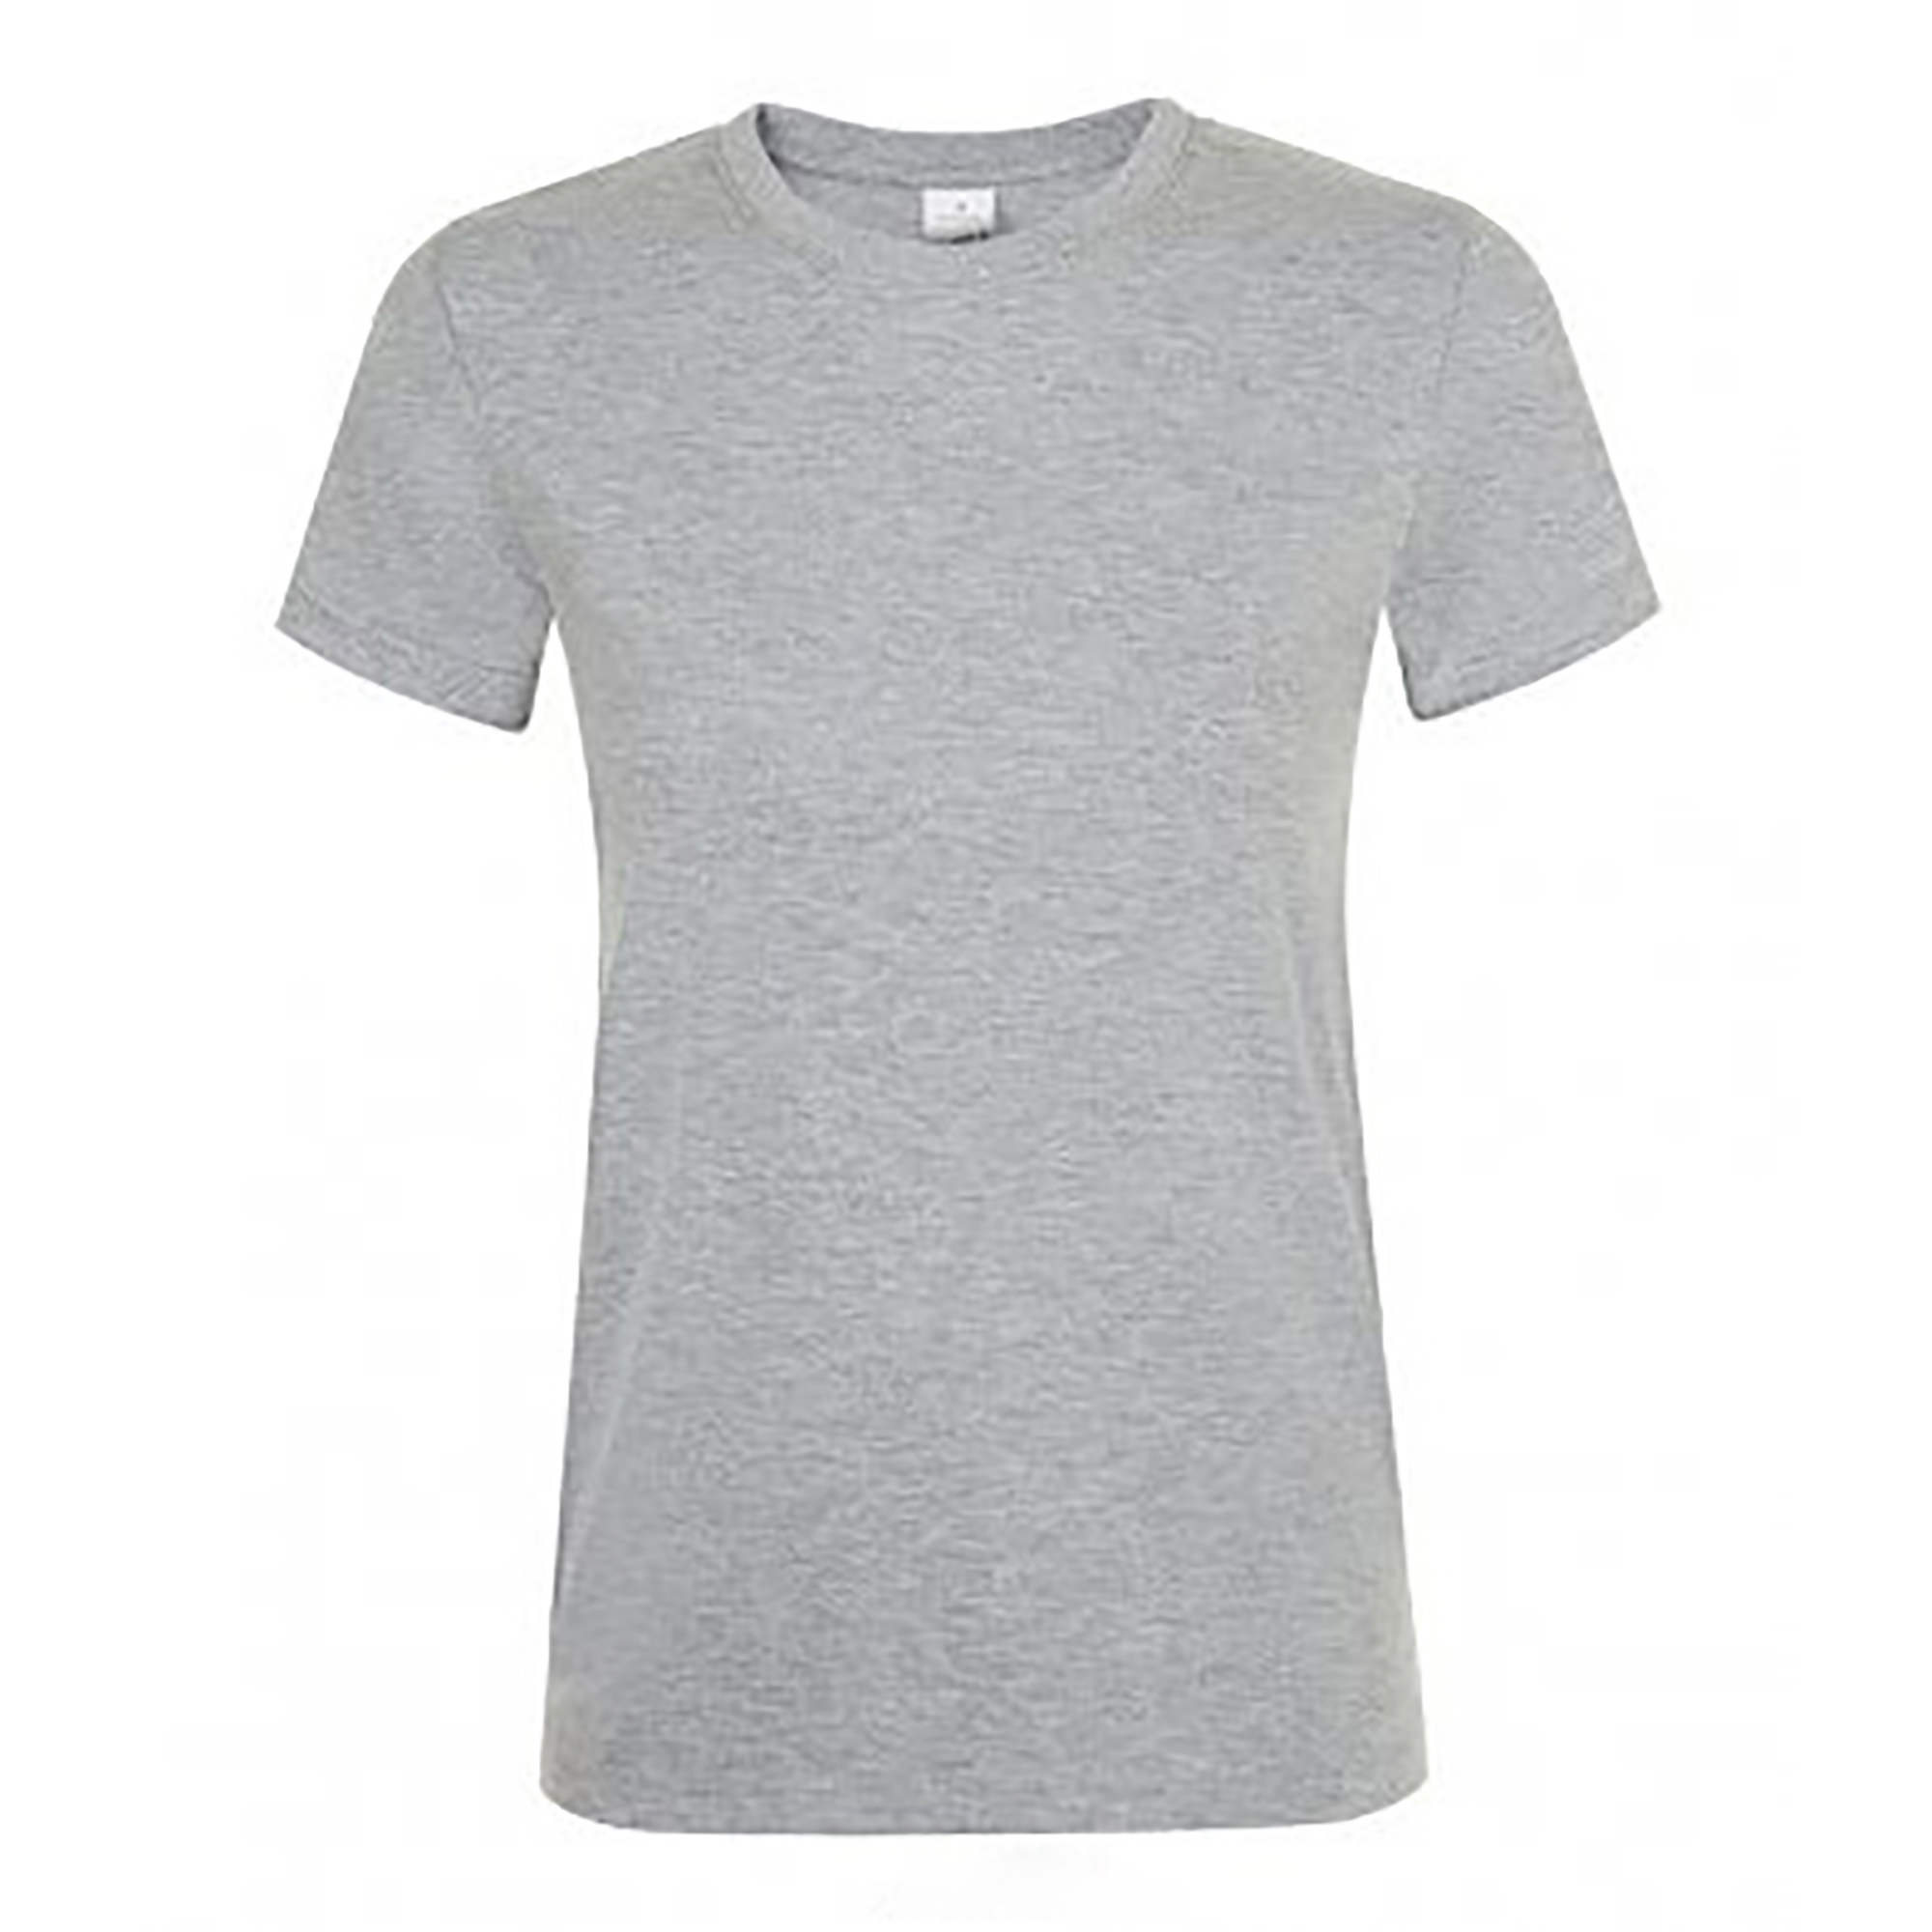 Camisetas mujer color gris